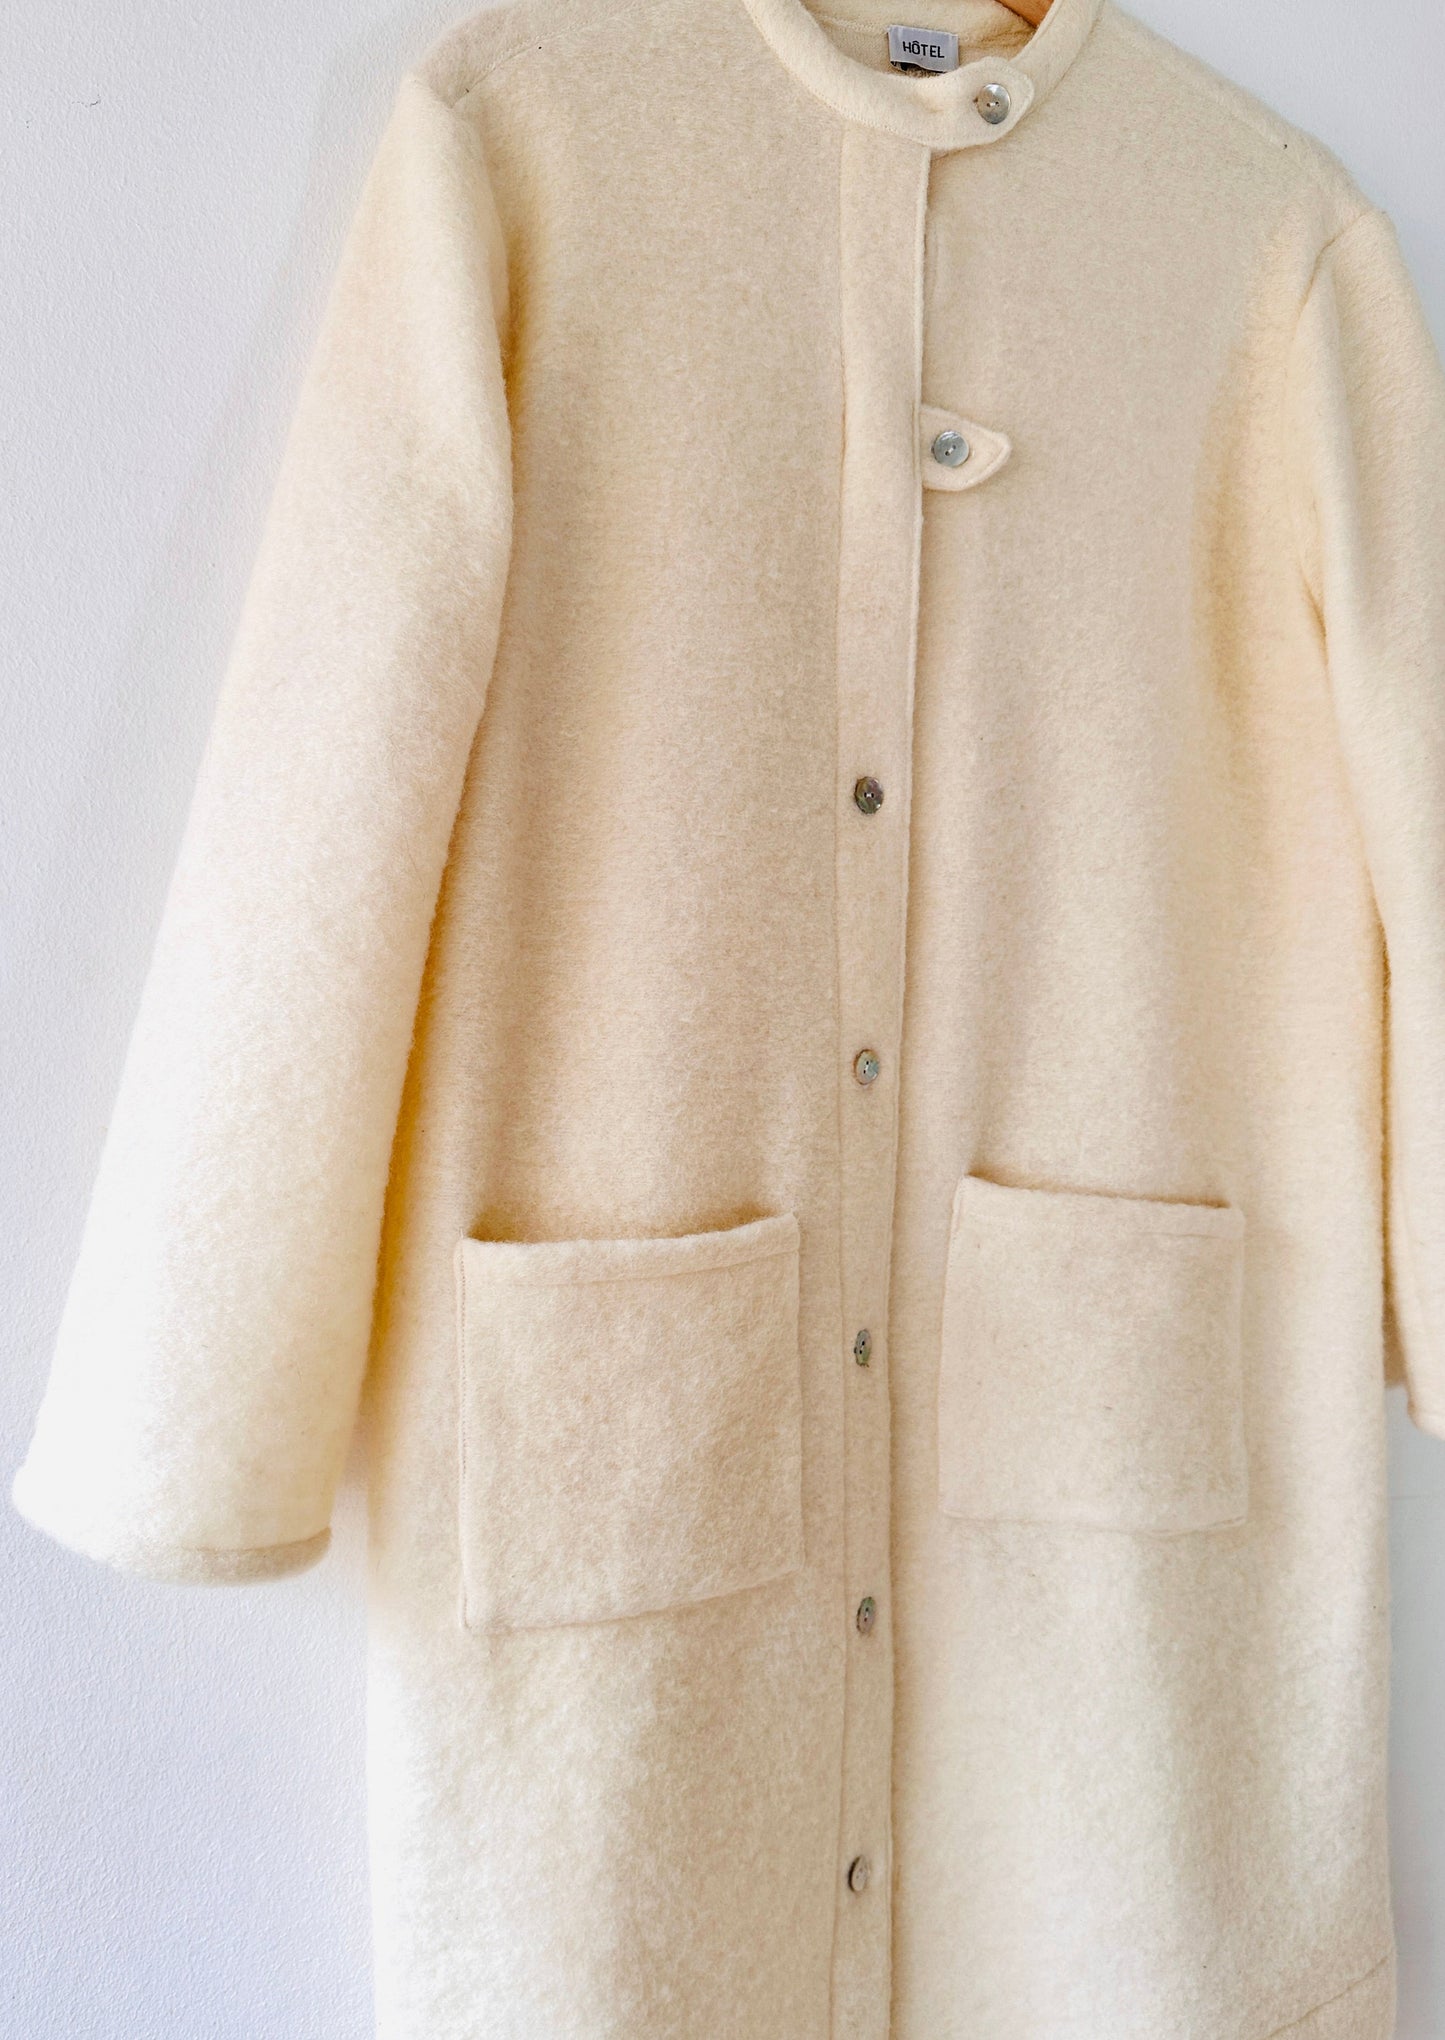 Chloé wool jacket